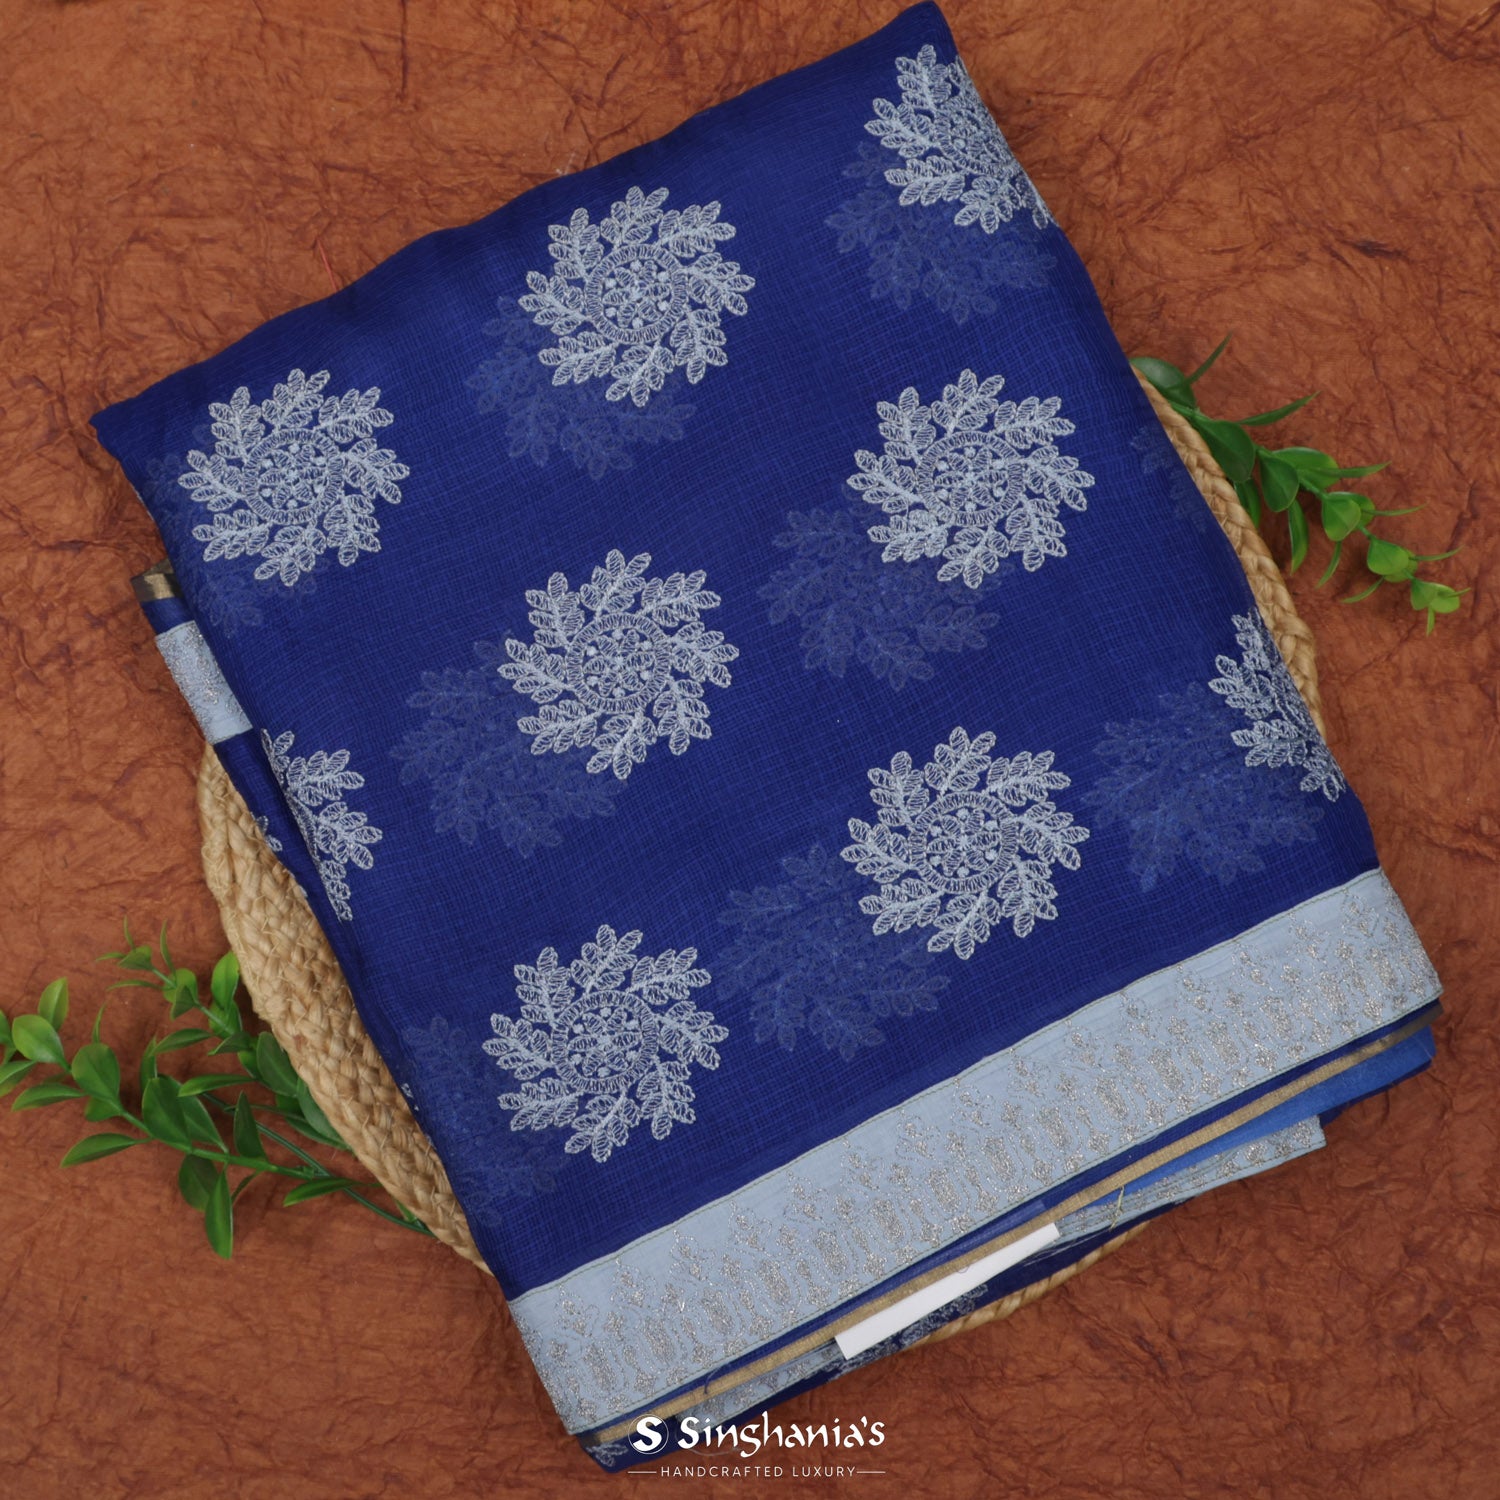 Penn Blue Kota Silk Saree With Floral Embroidery